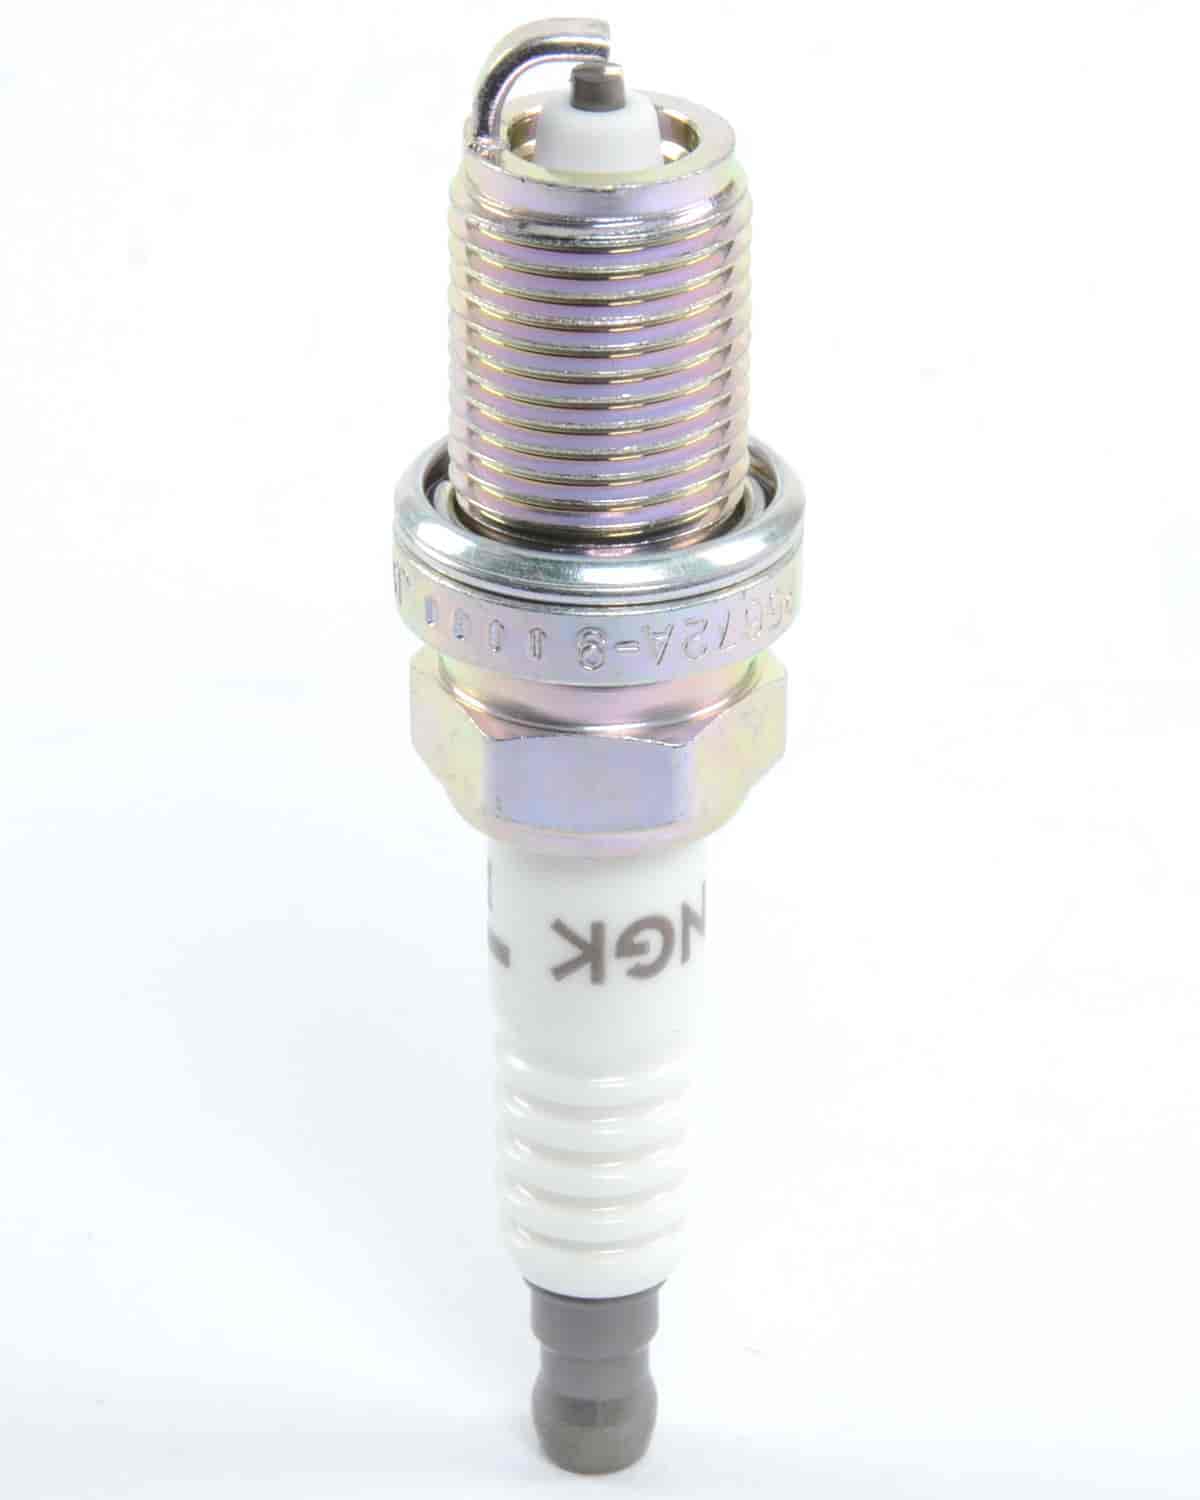 Racing Non-Resistor Spark Plug 14mm x 3/4 in. Reach